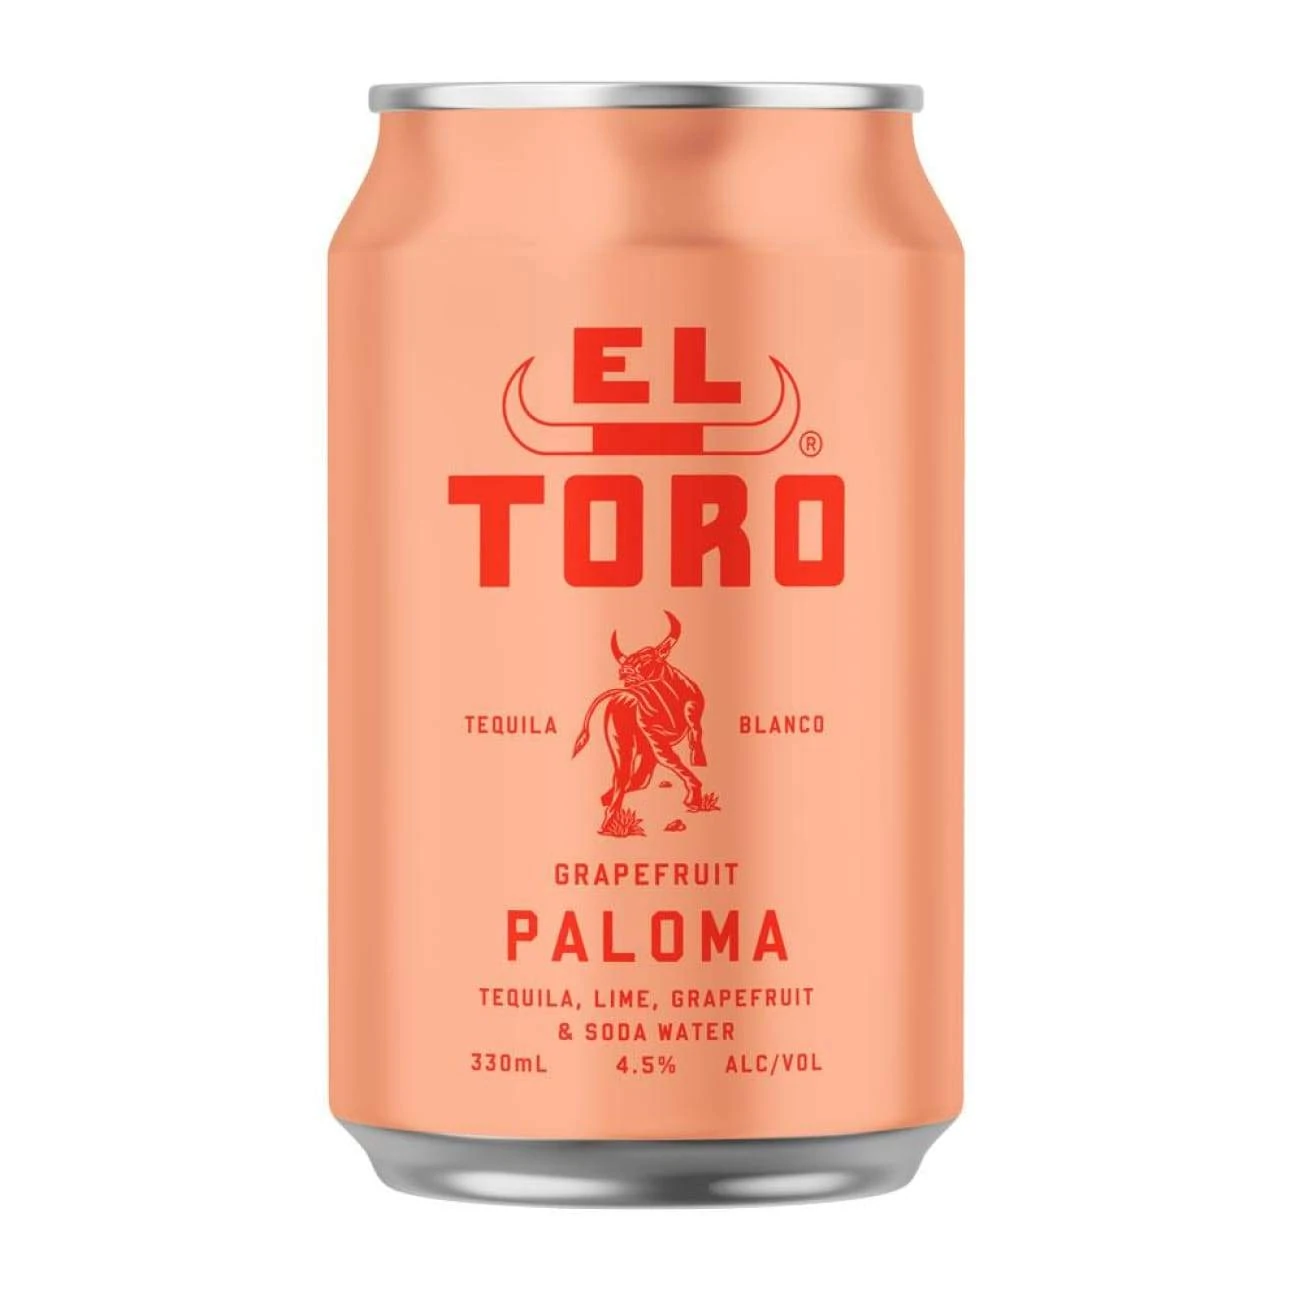 El Toro Grapefruit Paloma 330ml